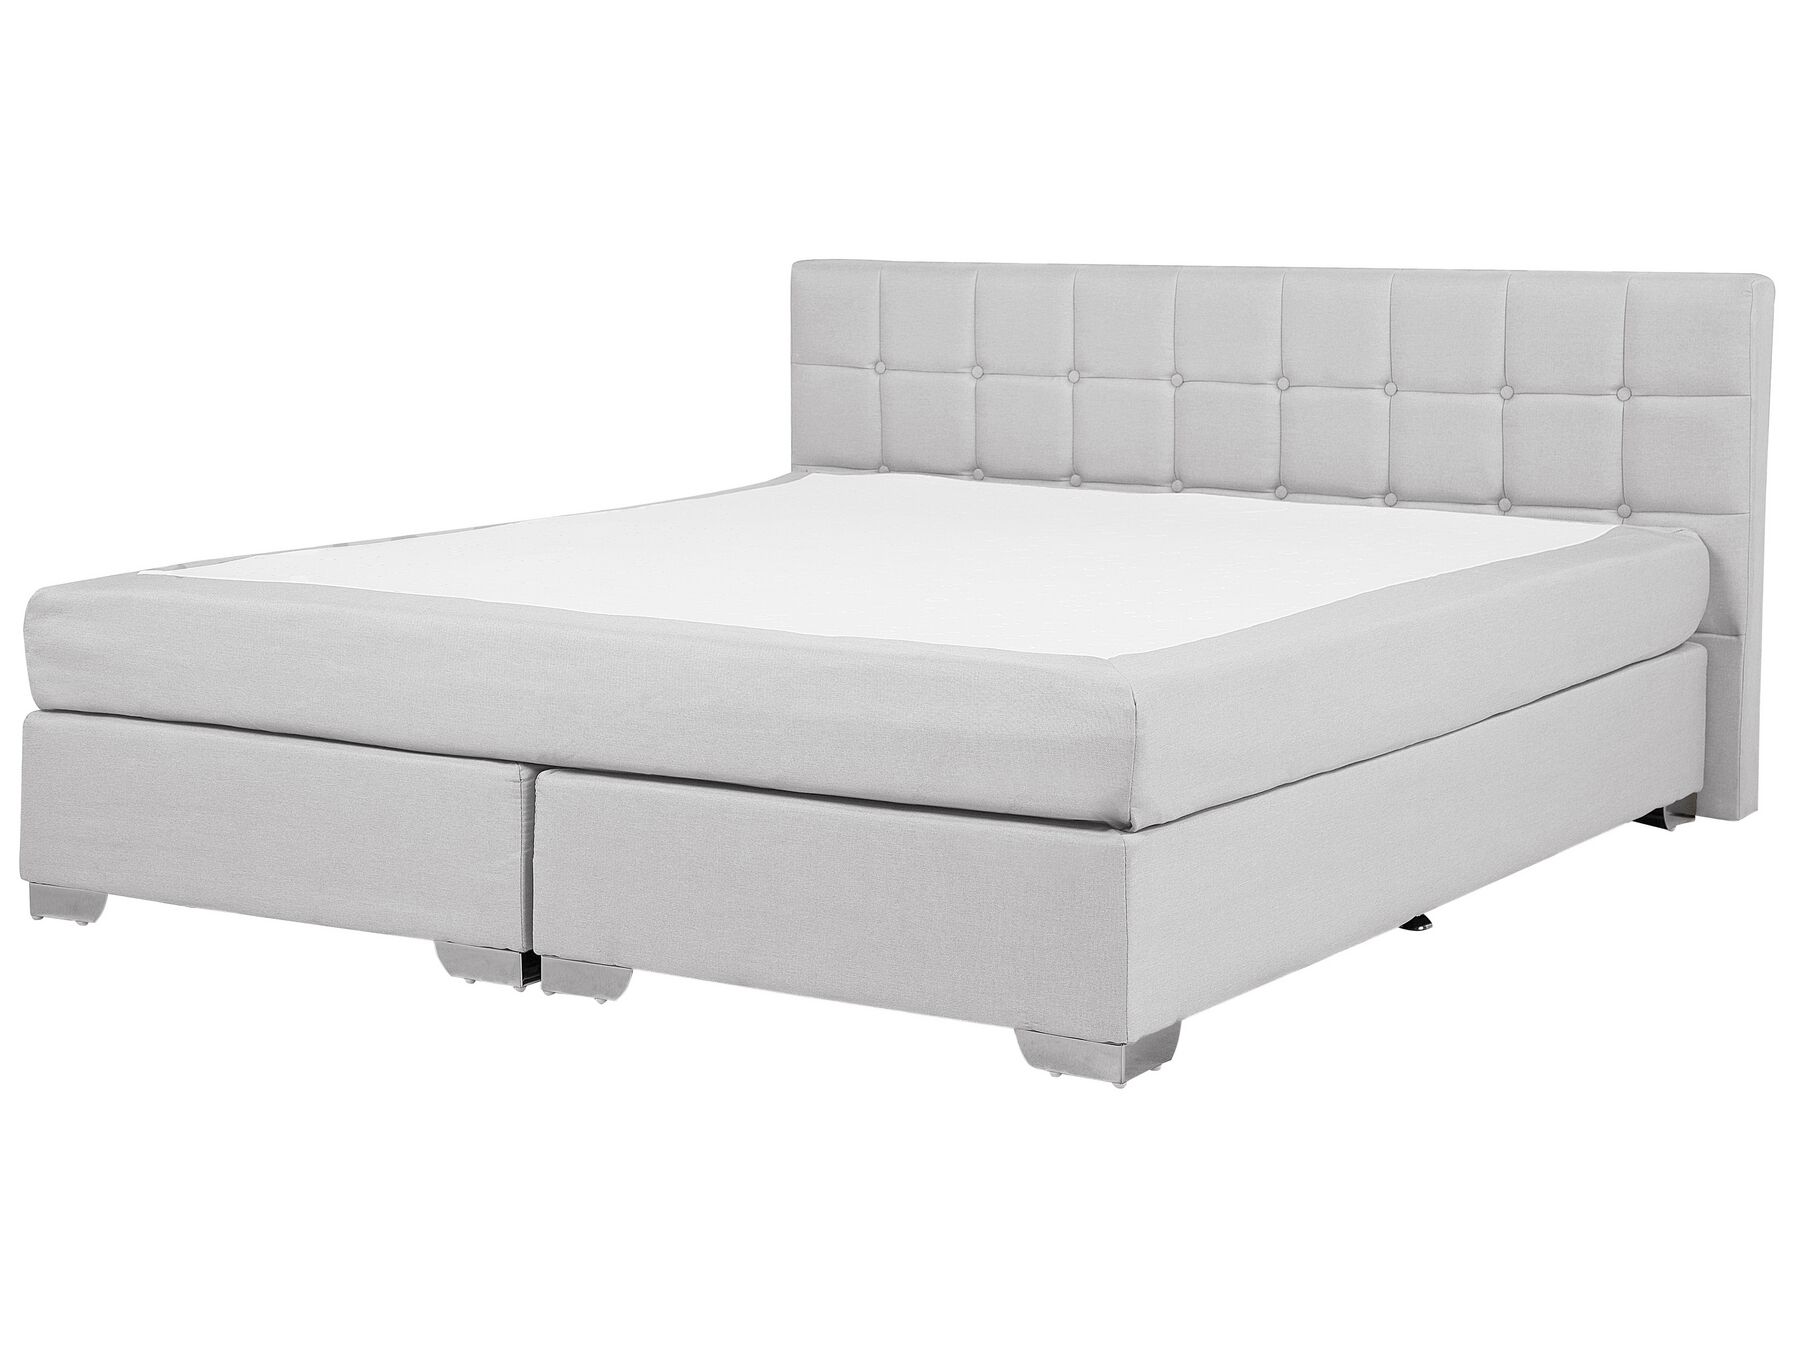 Fabric EU Super King Size Divan Bed Light Grey ADMIRAL_678601